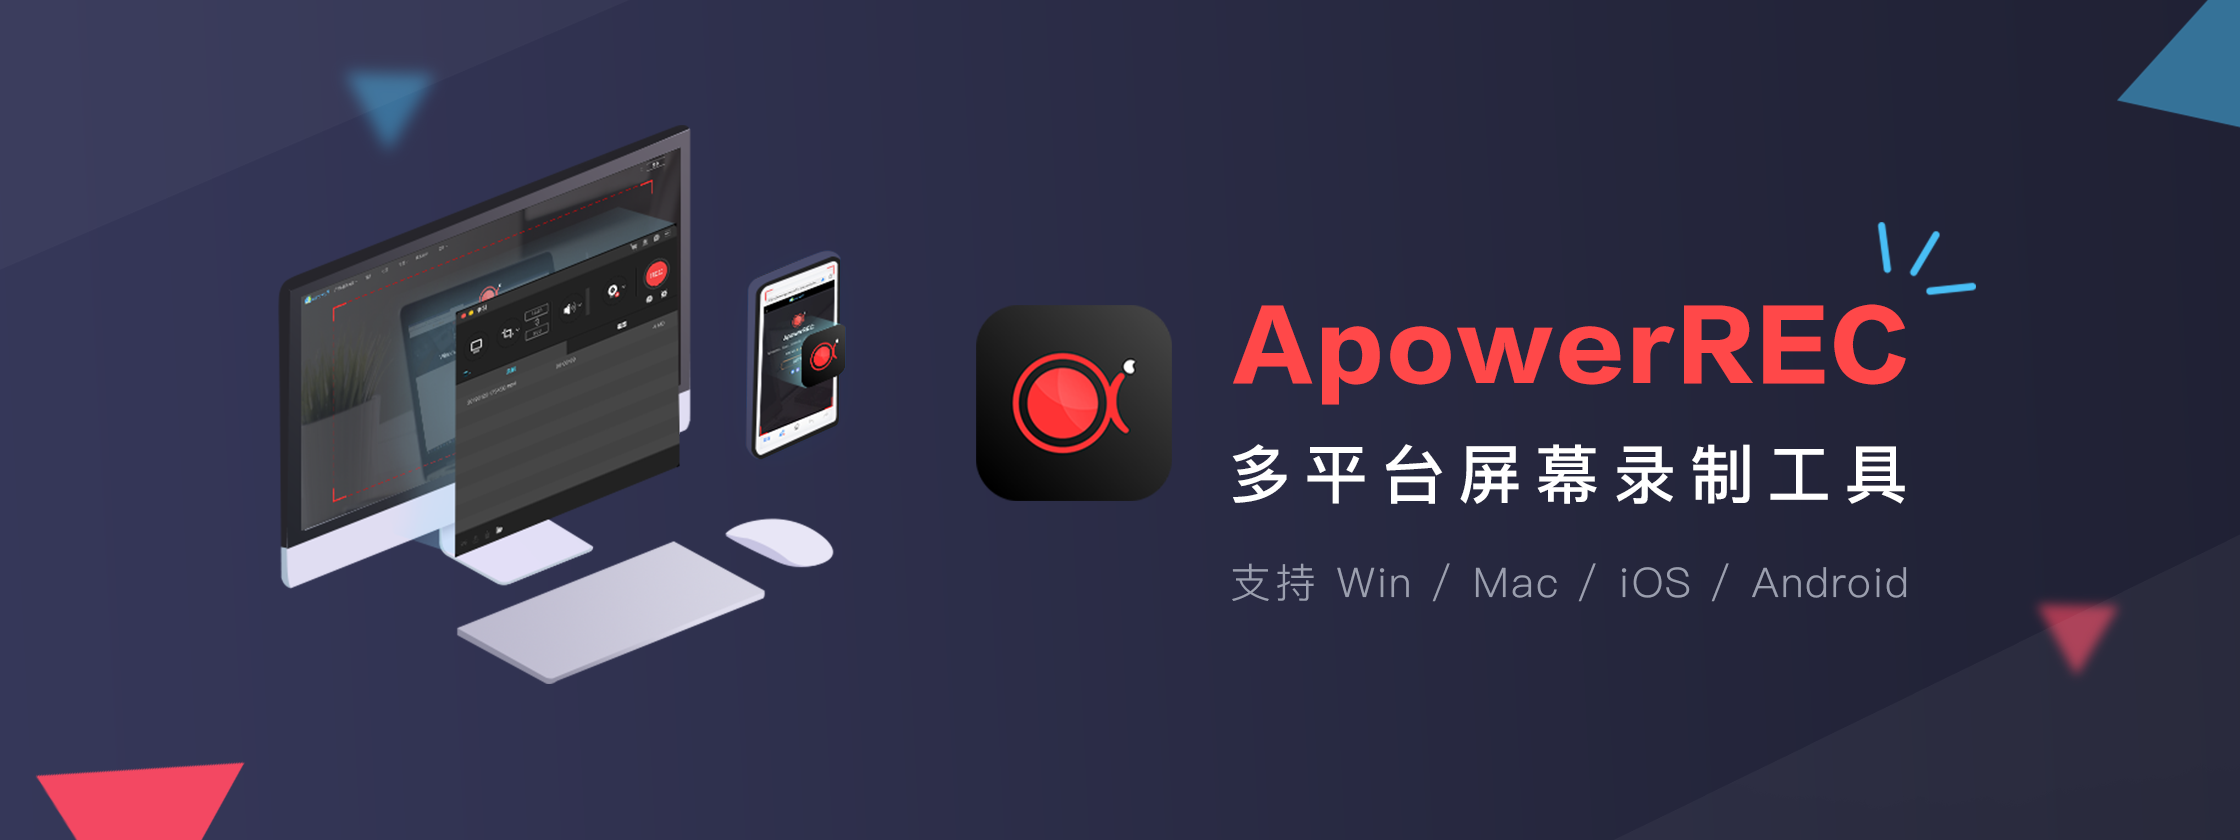 ApowerREC: 多平台屏幕录制工具,支持 Win / Mac / iOS / Android